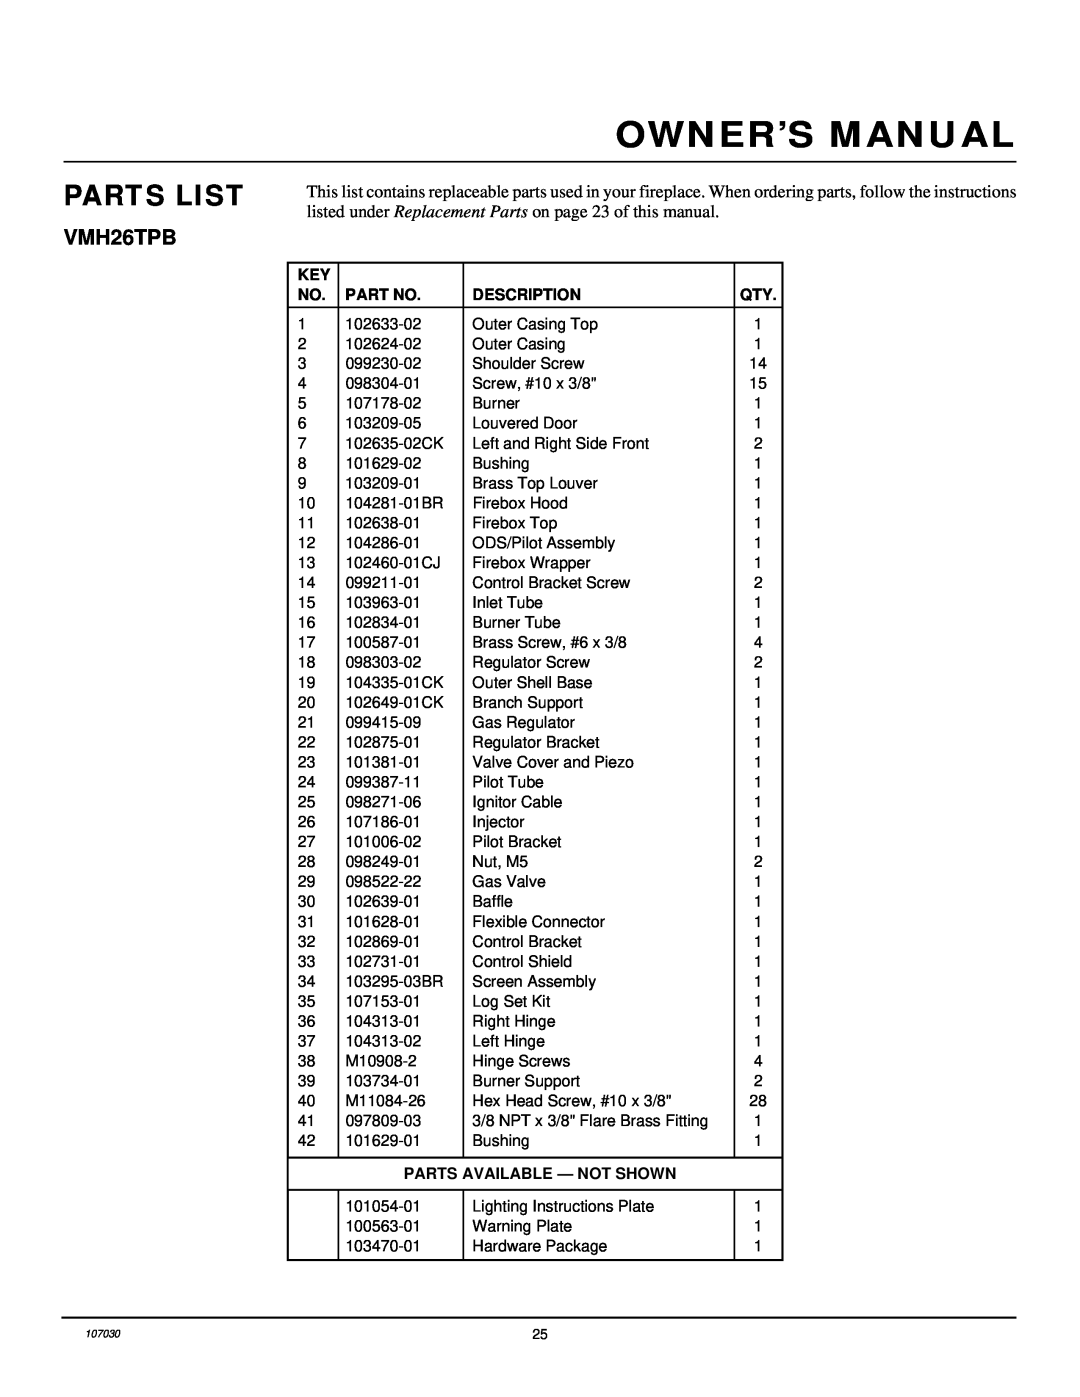 Desa VMH26TPB 14 installation manual Parts List, Description, Parts Available - Not Shown 